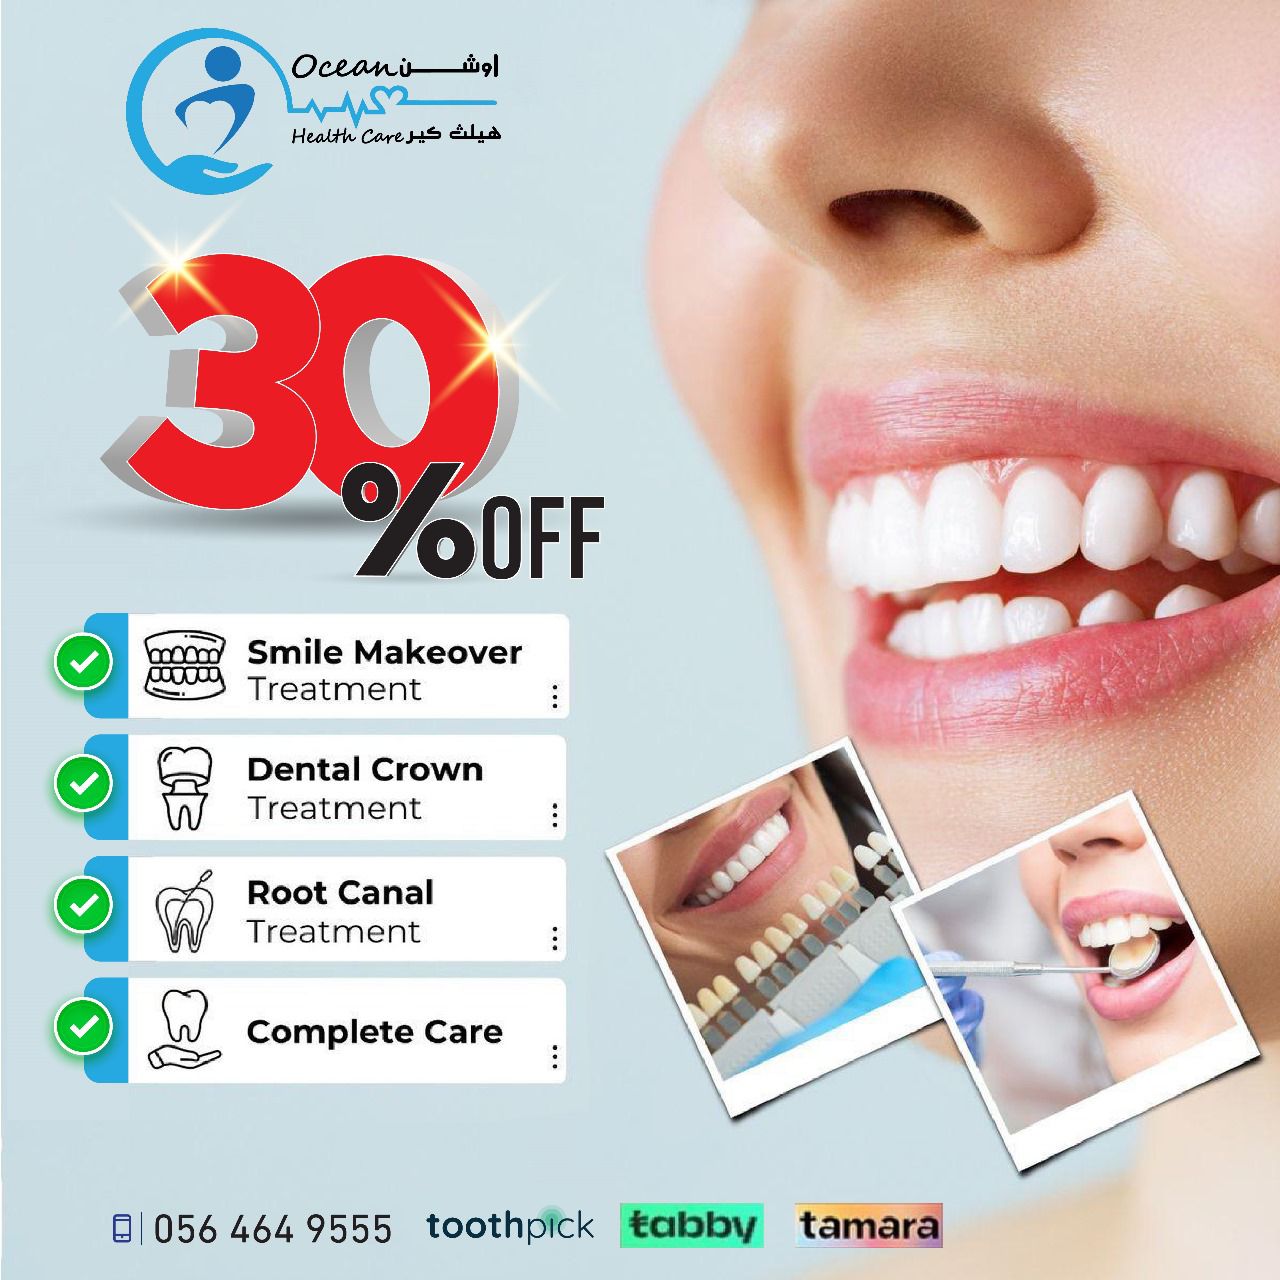 dental treatments offers, dentist, discount